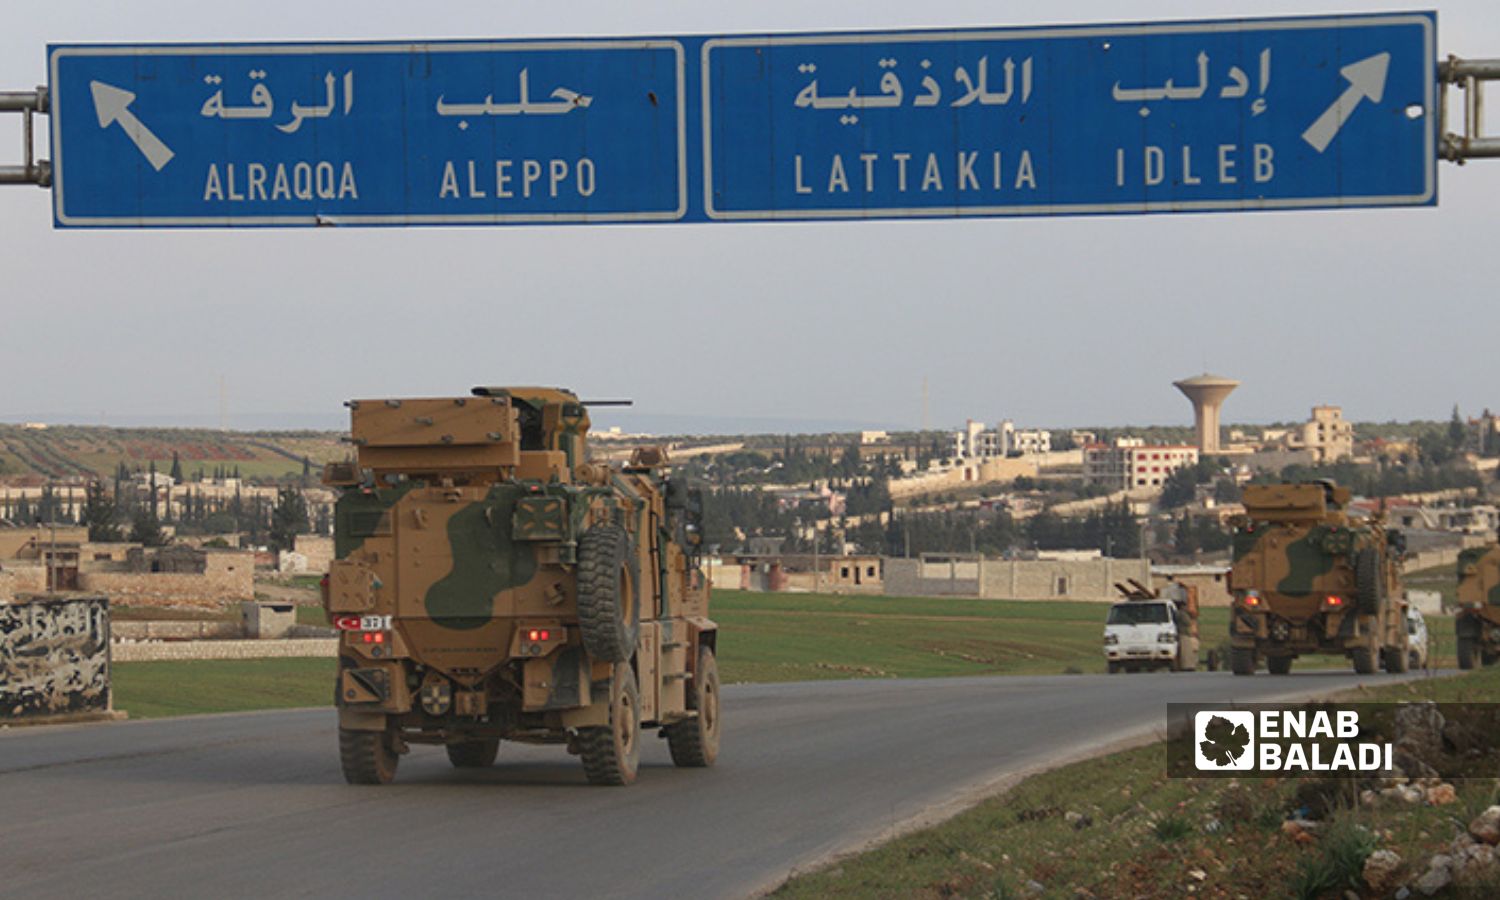 A convoy of 25 Turkish military vehicles enters Syrian territory in the city of al-Atarib - February 3, 2020 (Enab Baladi)